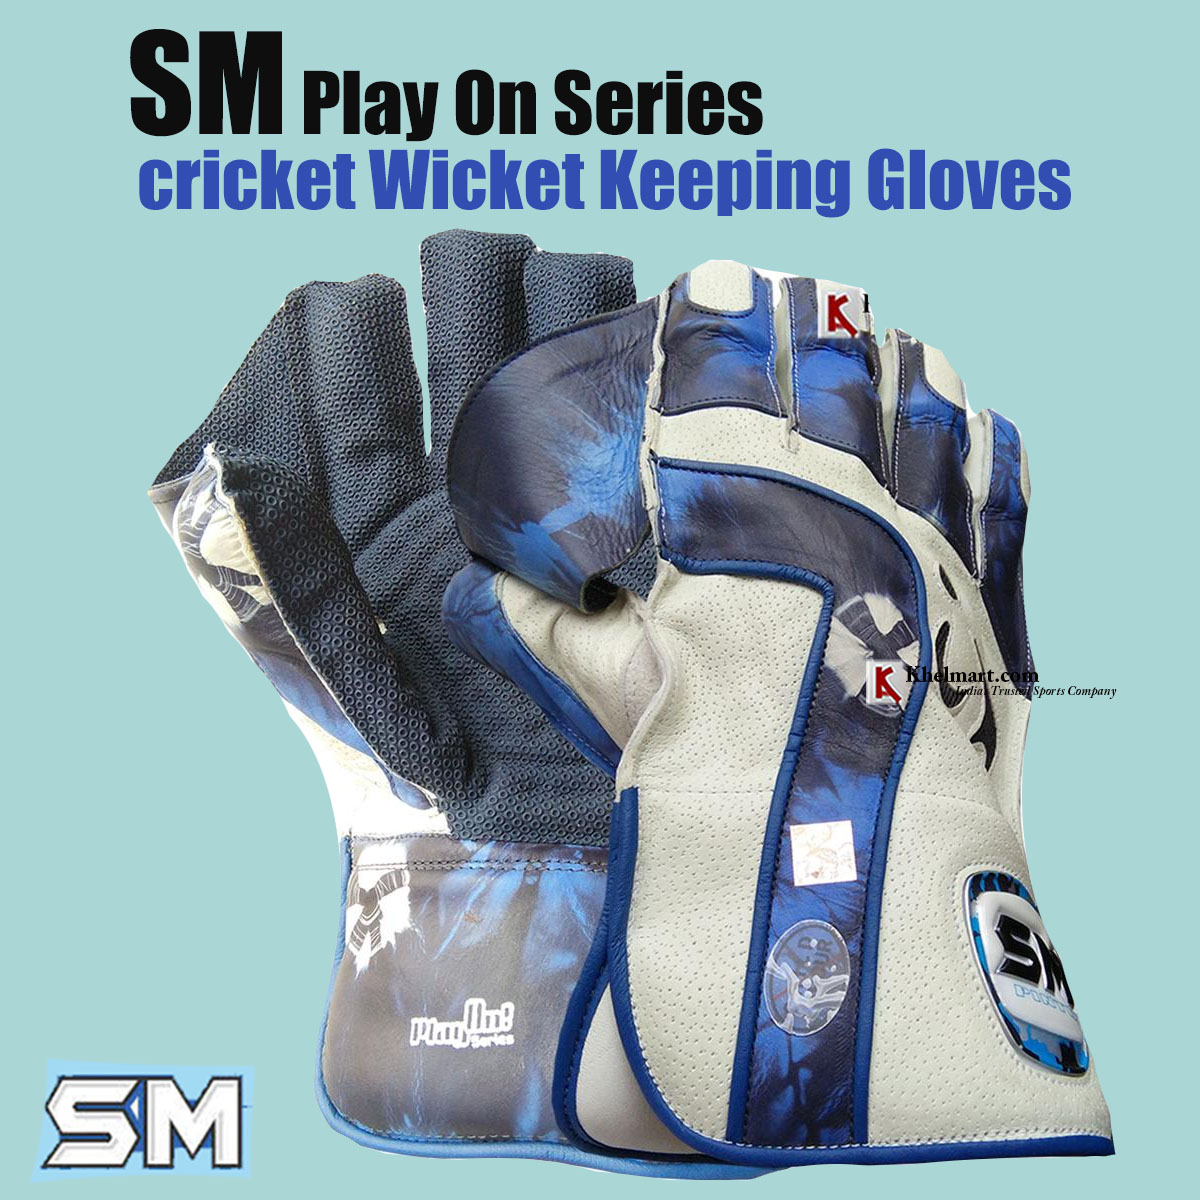 SM_Play_On_Series_Cricket_Wicket_Keeping_Gloves_8.jpg